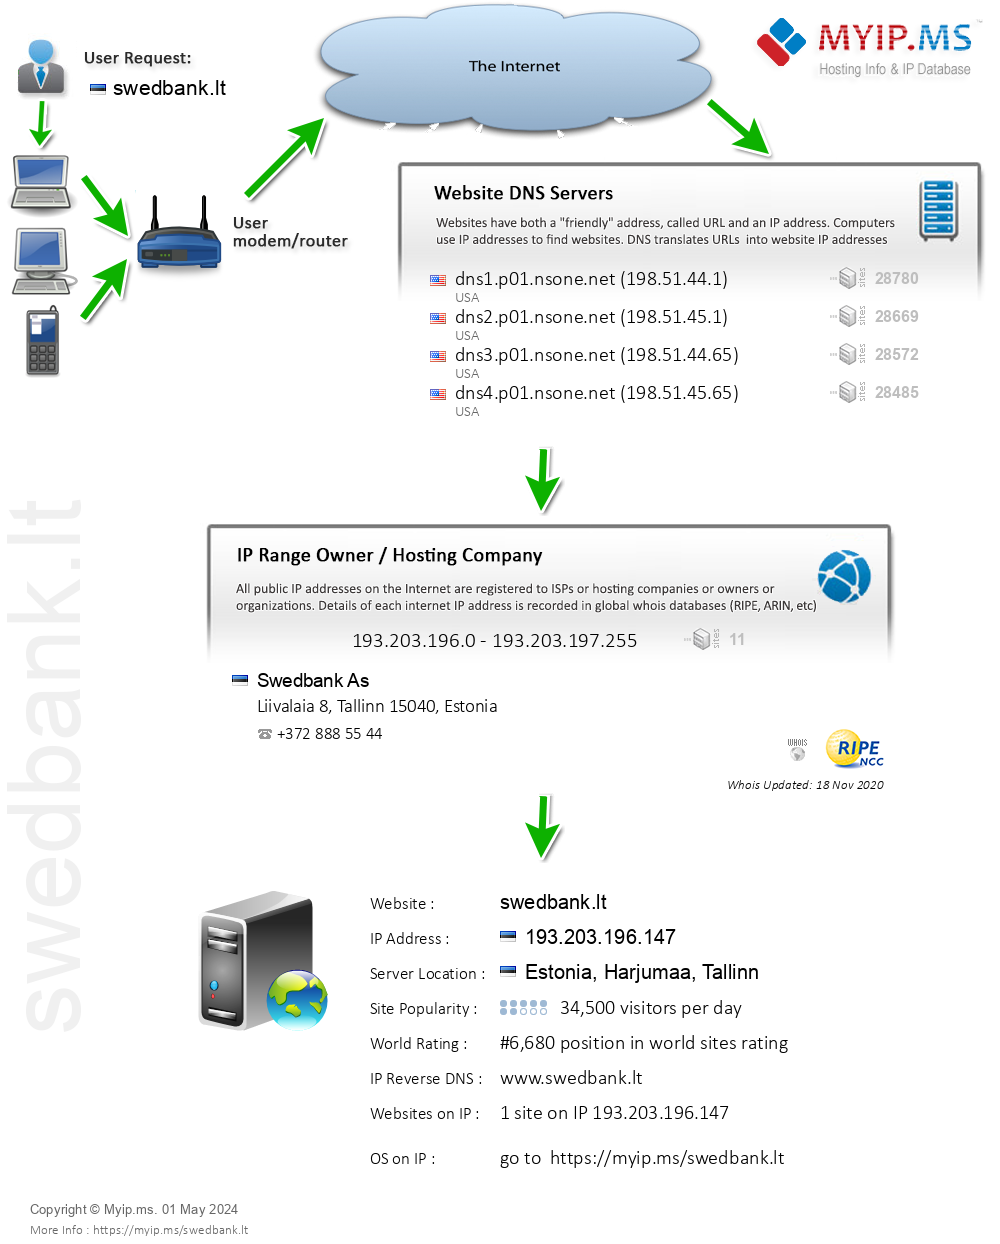 Swedbank.lt - Website Hosting Visual IP Diagram